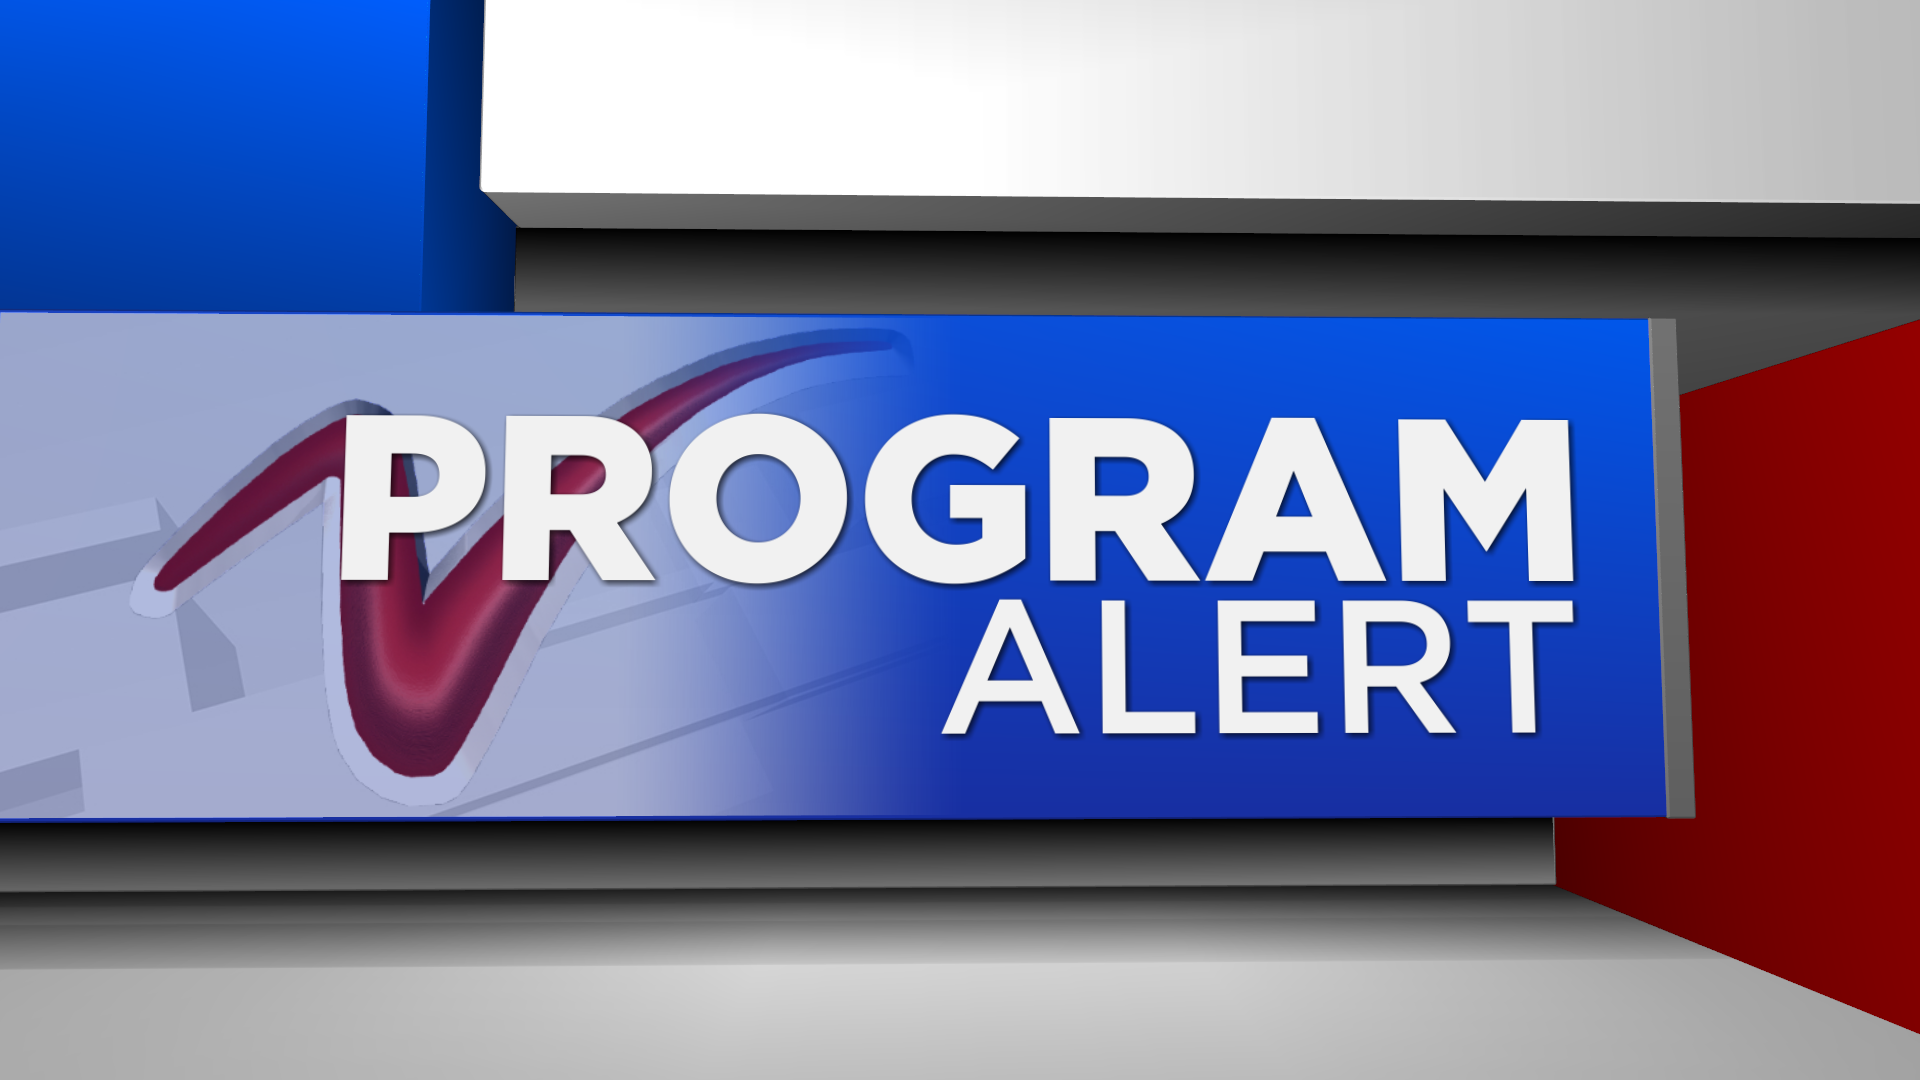 Program Alert Valley News Live temporarily off air for maintenance